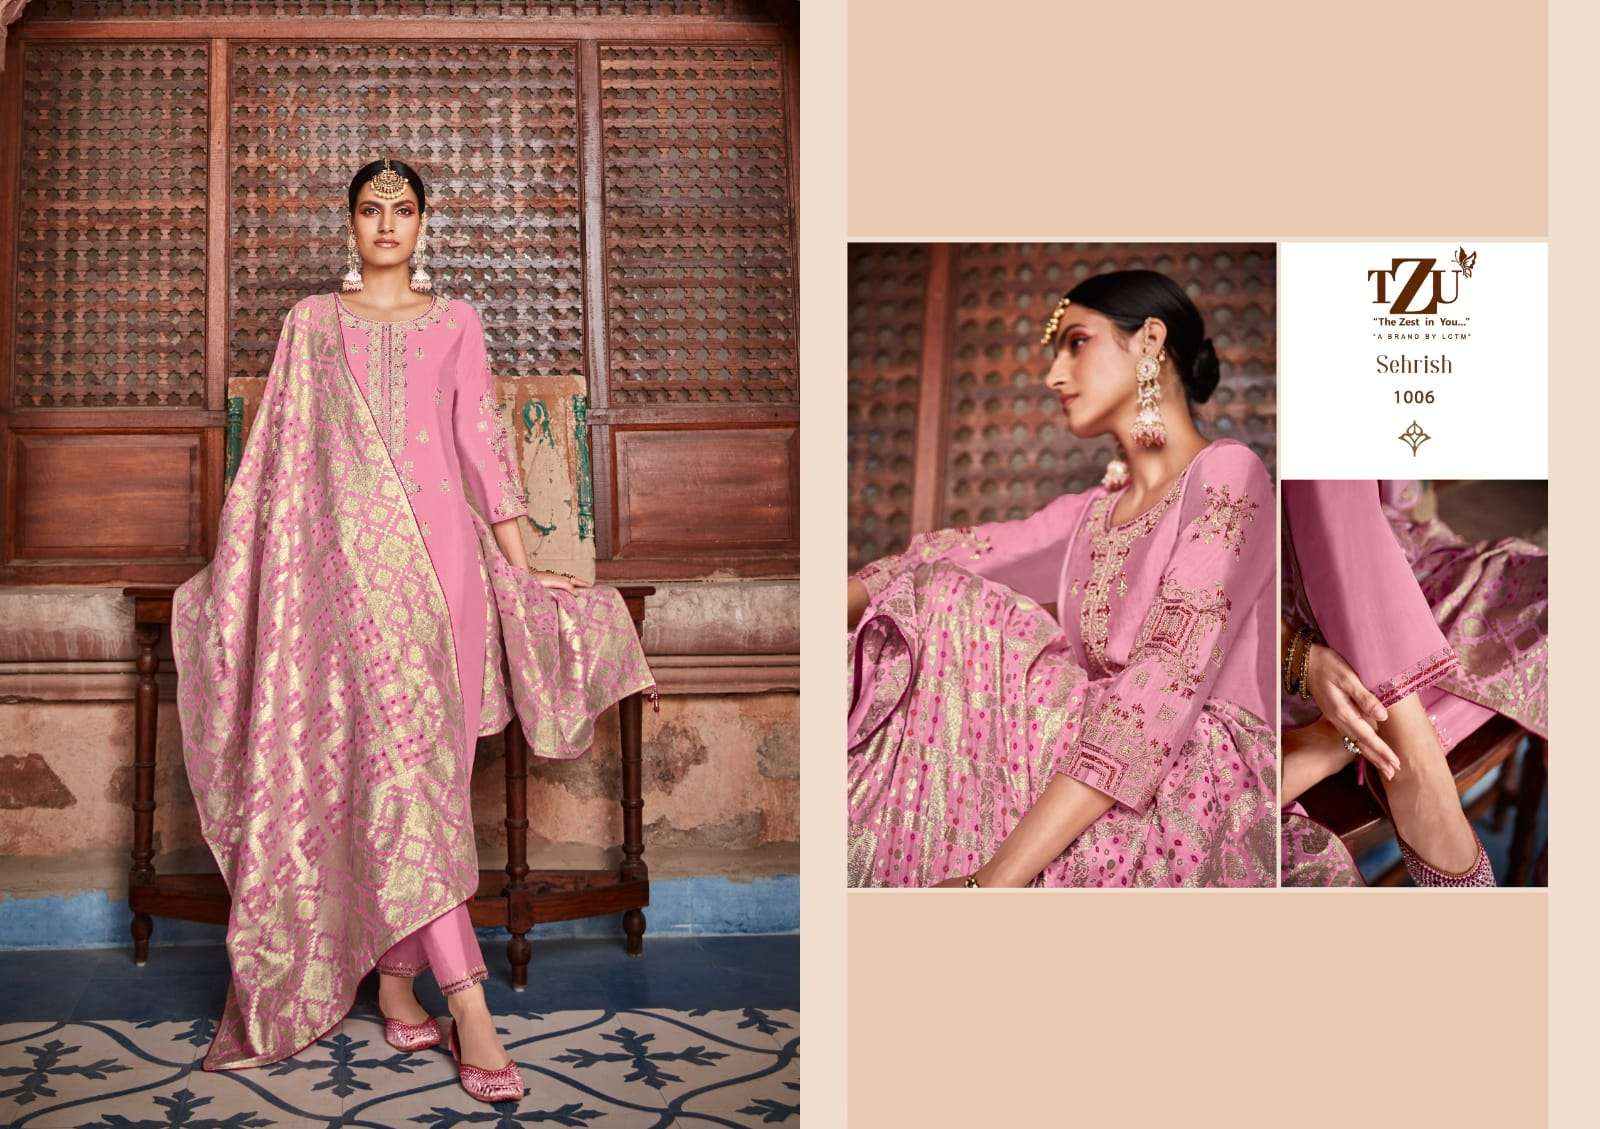 tzu sehrish 1001-1006 series exclusive ready made roman silk salwar kameez online wholesale price surat 